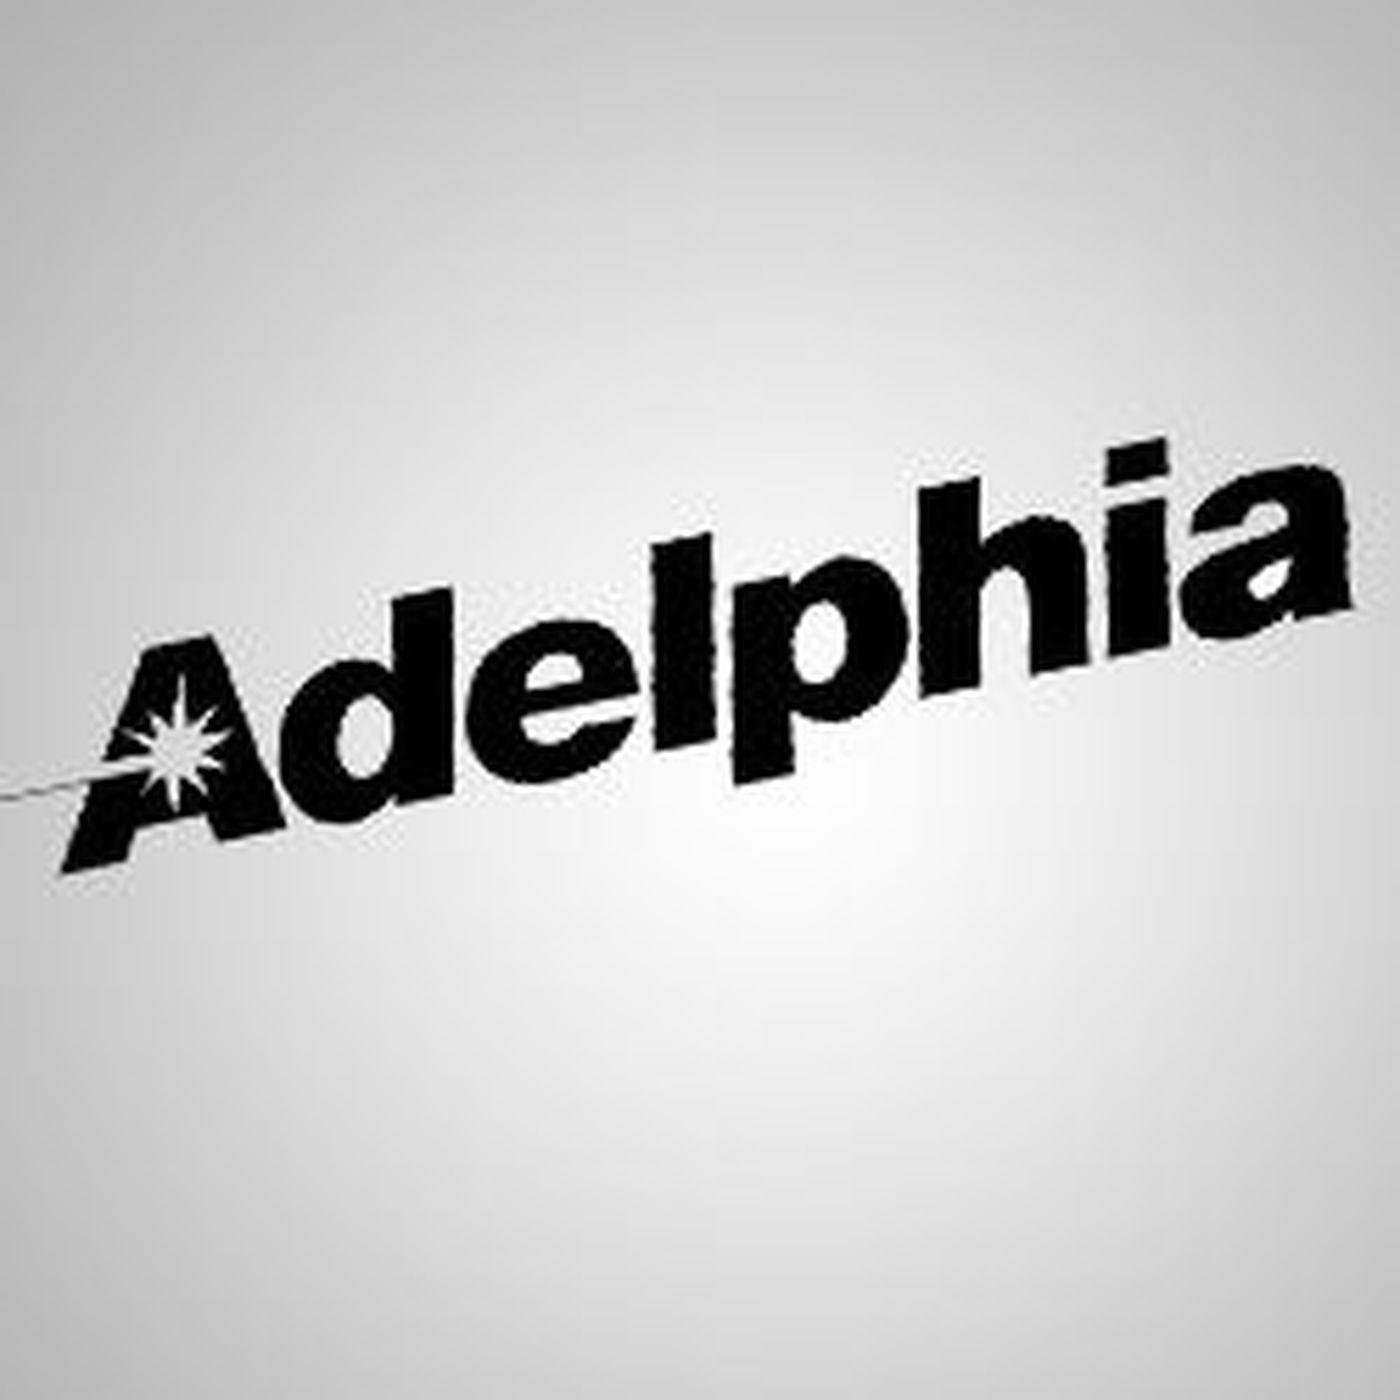 Adelphia Logo - Former Adelphia Executives John and Tim Rigas Report to Prison